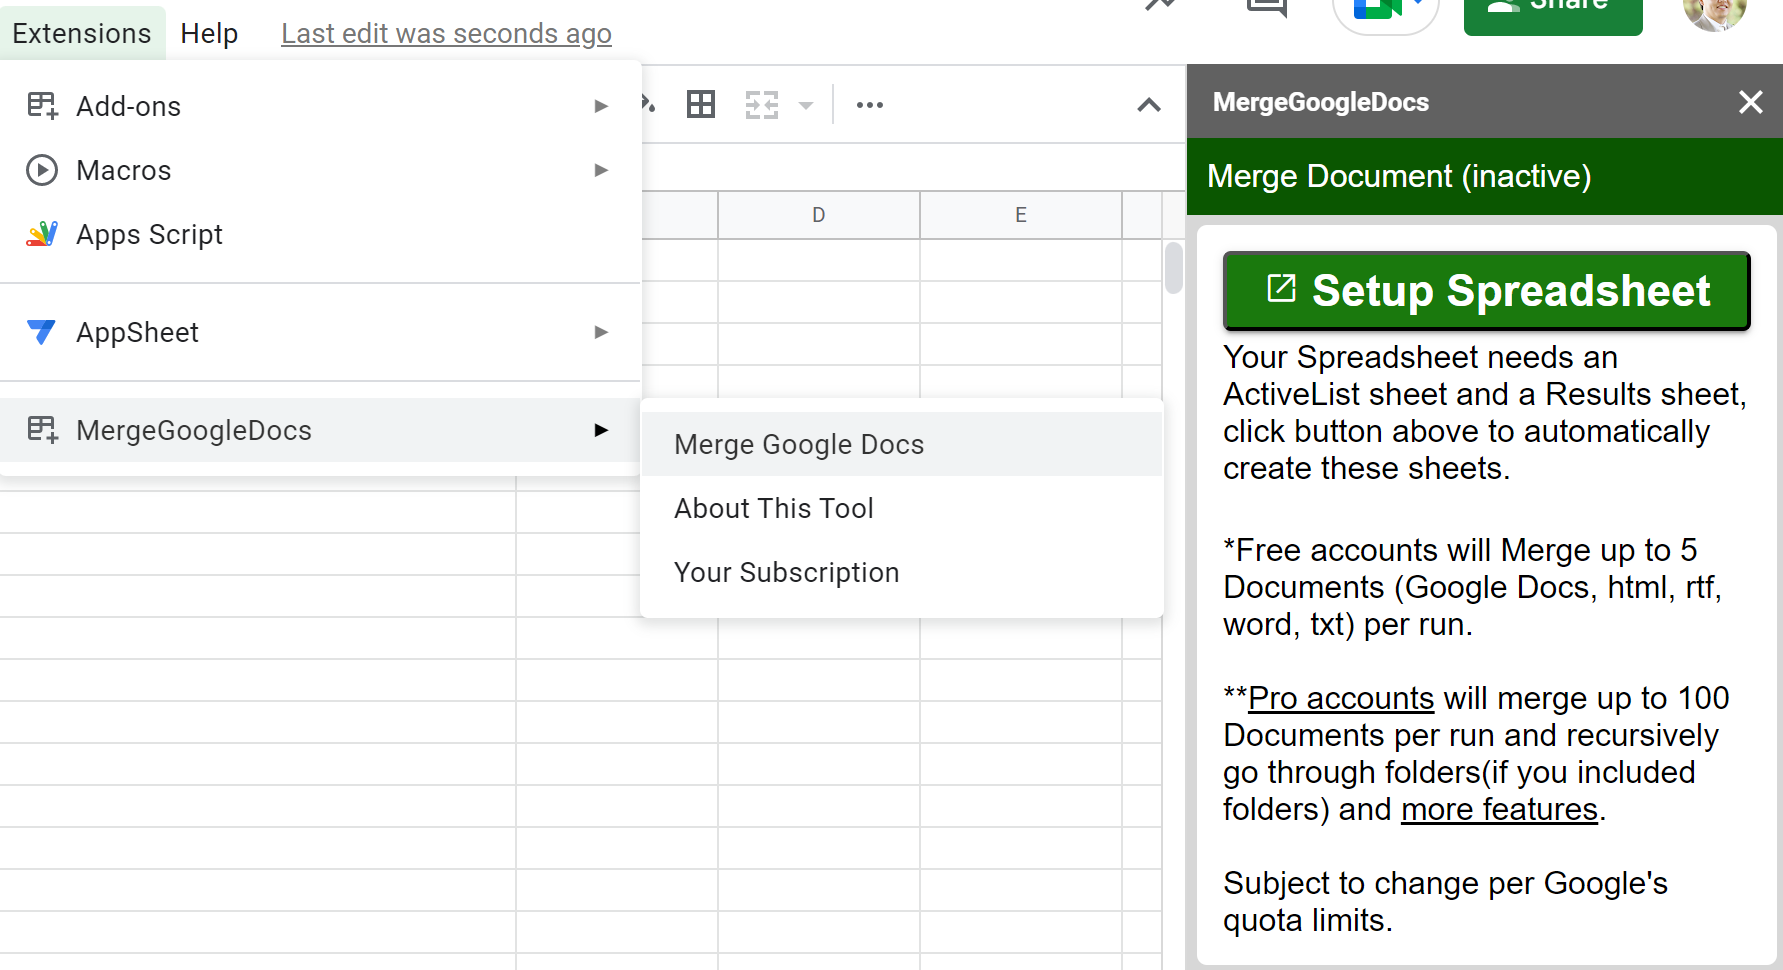 Setup Spreadsheet screen for Merge Google Docs.